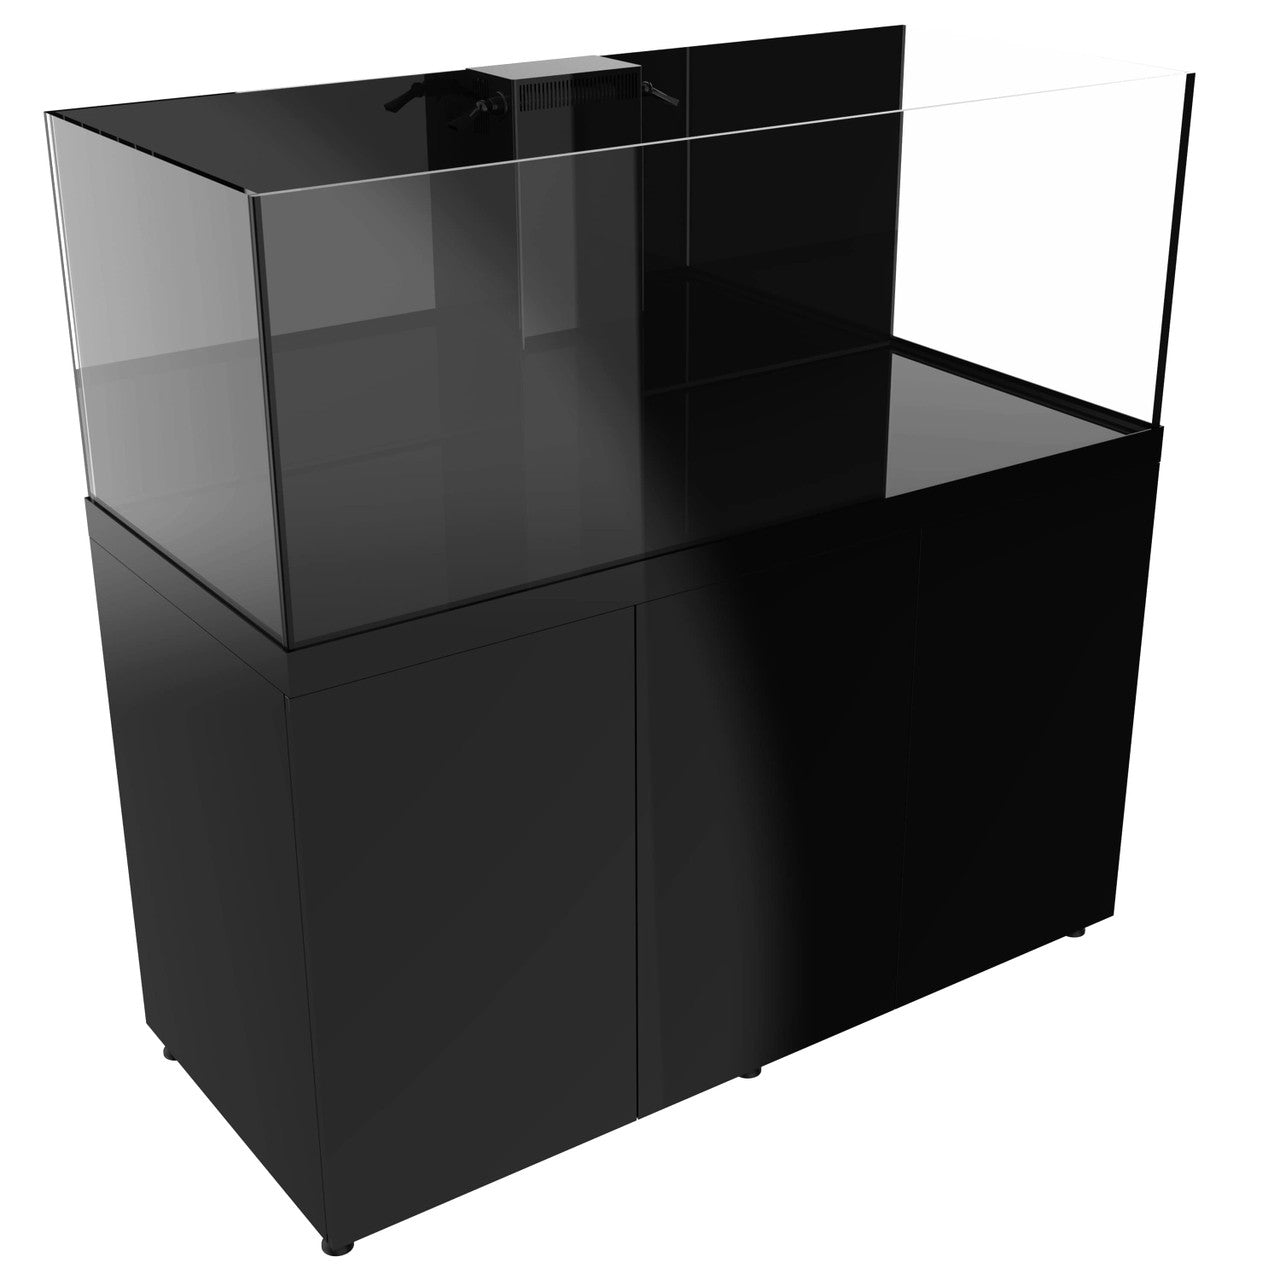 Pro Clear Aquatic Systems ProStar Rimless Glass Aquarium Combo Black 200gal